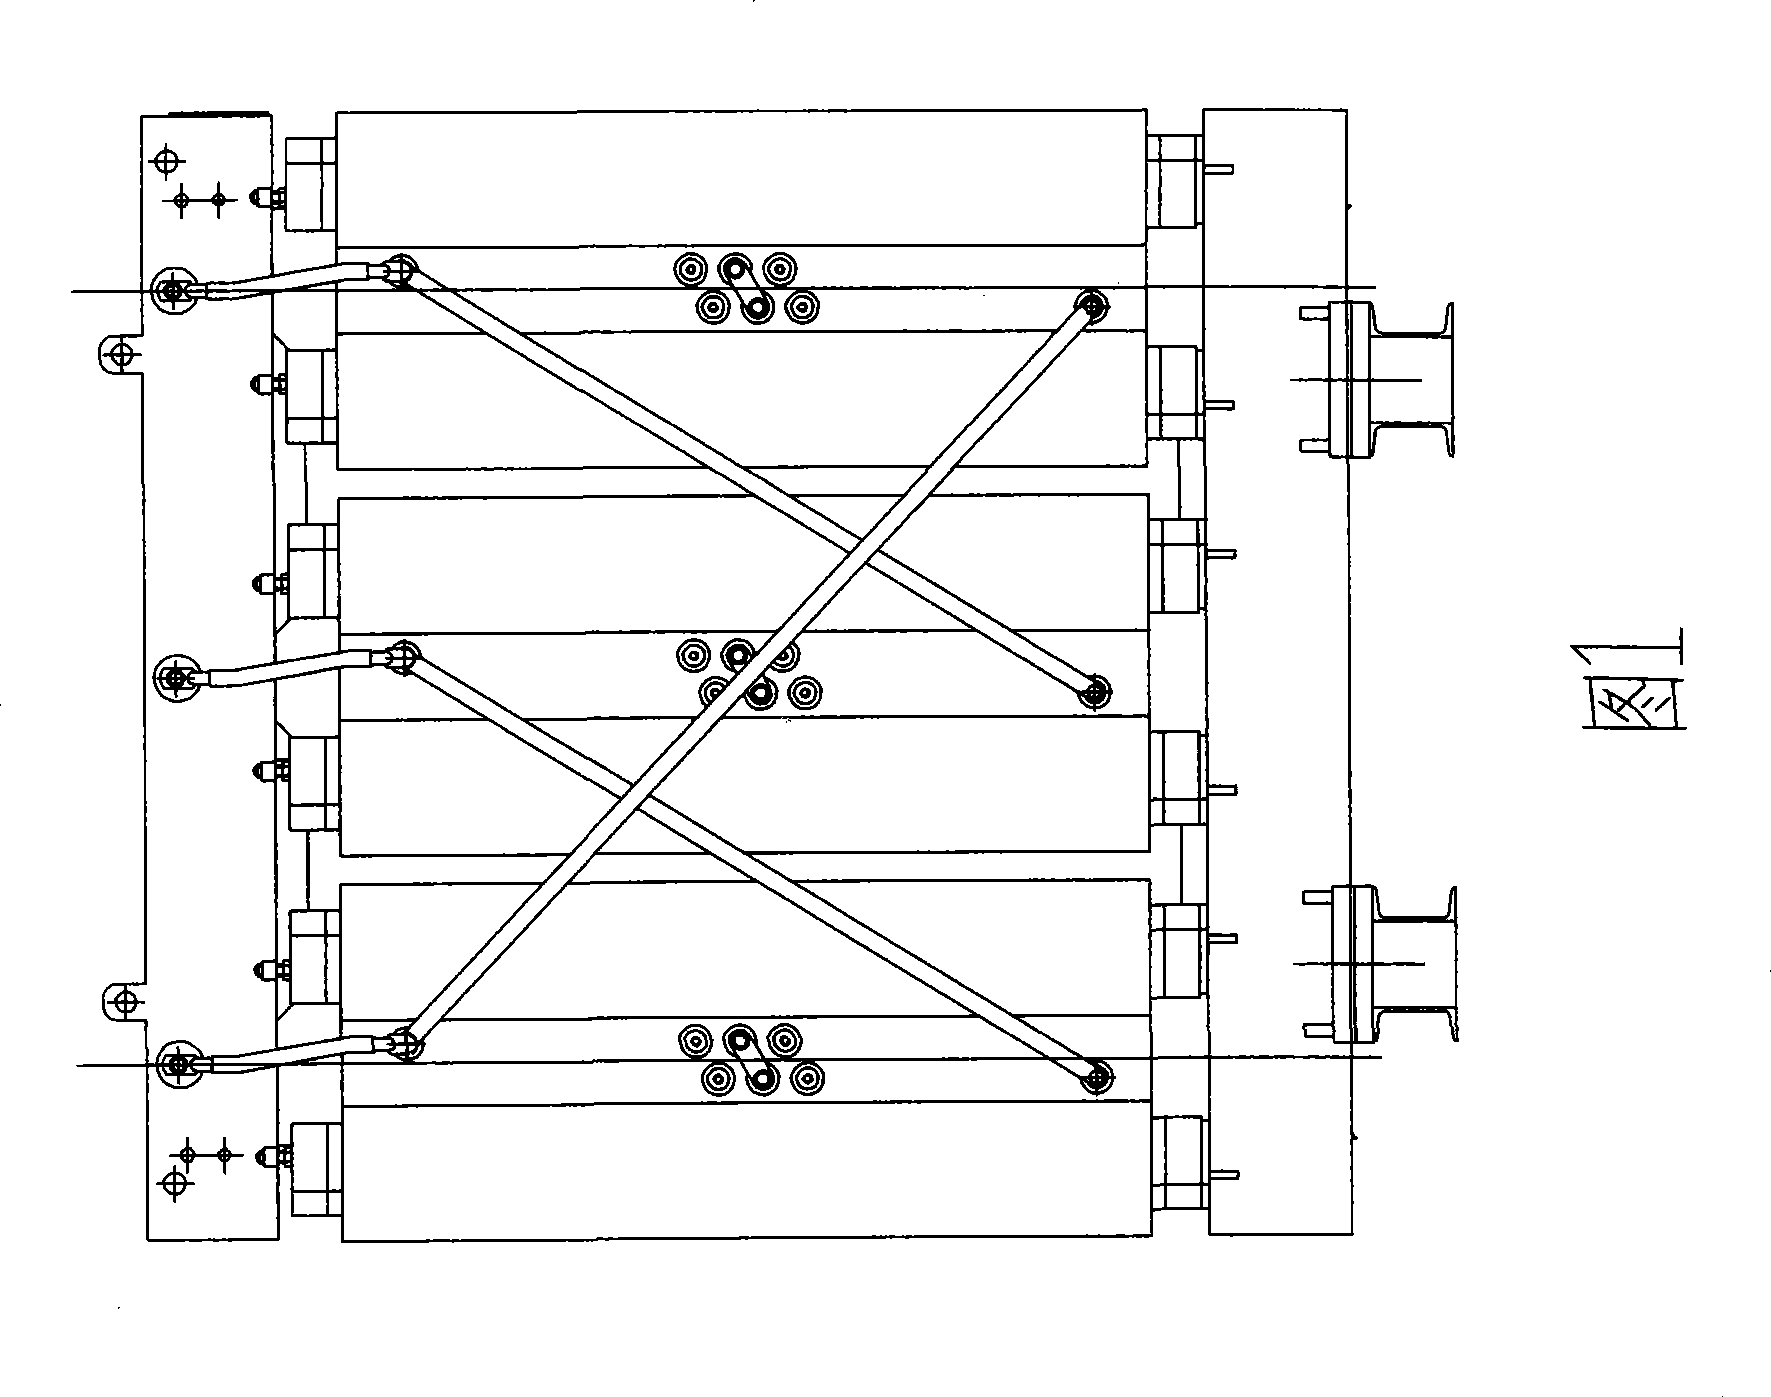 Multi-stage dry voltage regulating transformer